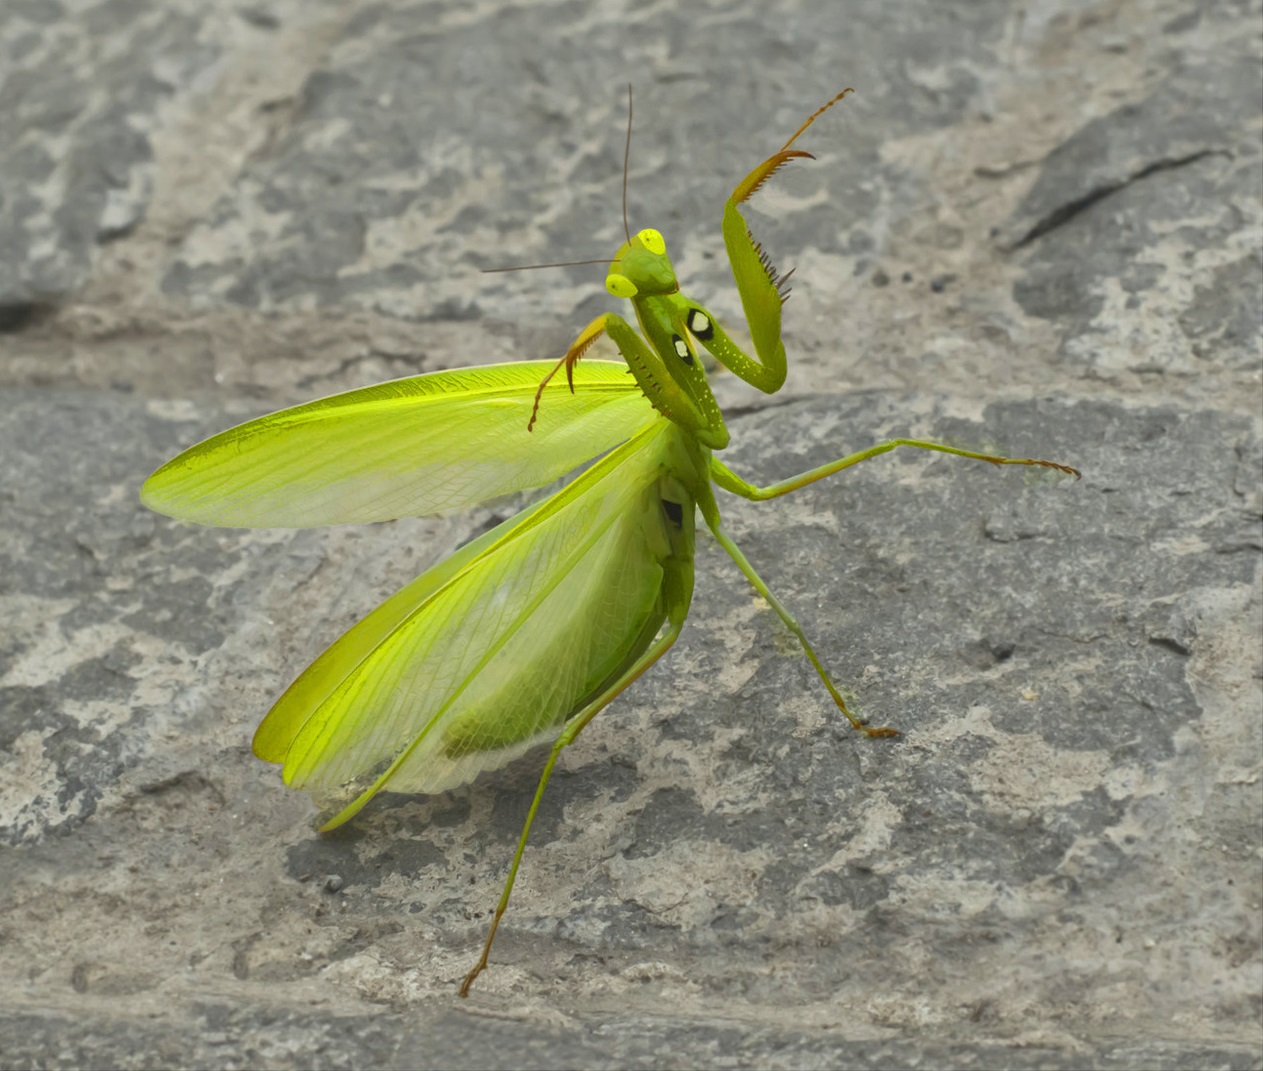 Mantis, kana machechi echitendero (lat. Mantis religiosa)